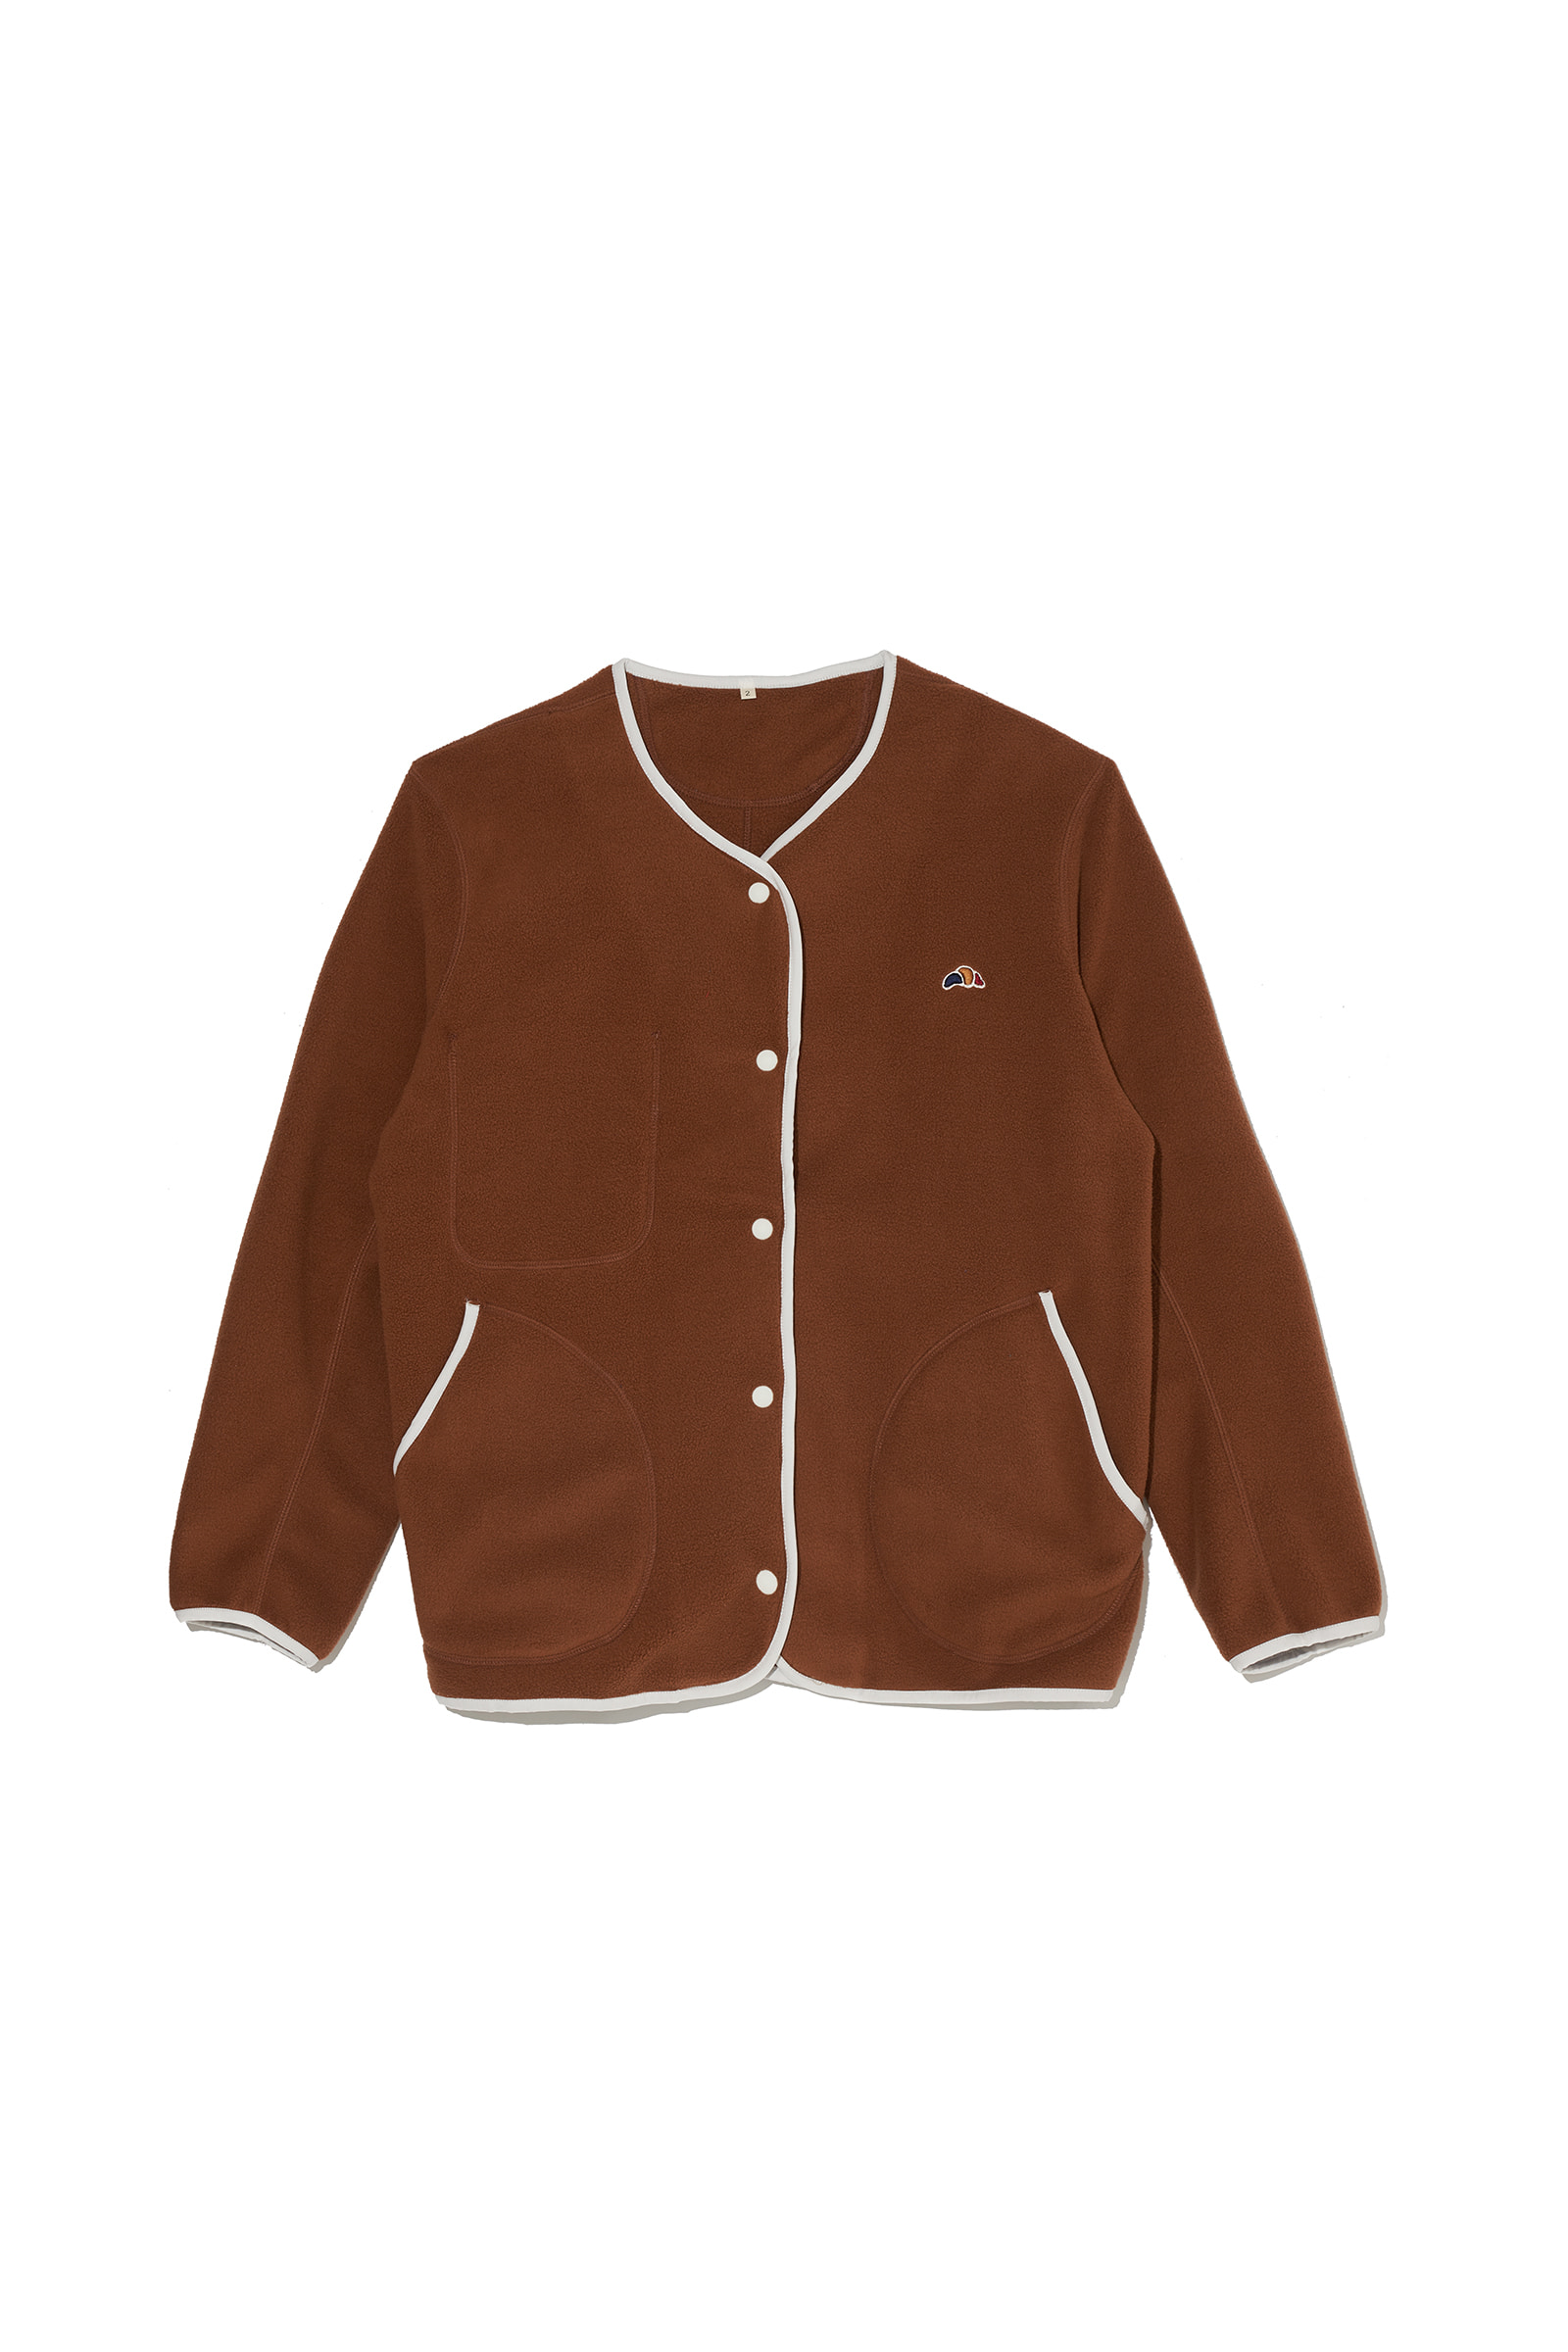 ep.5 Croissant no collar fleece jacket (Brown)